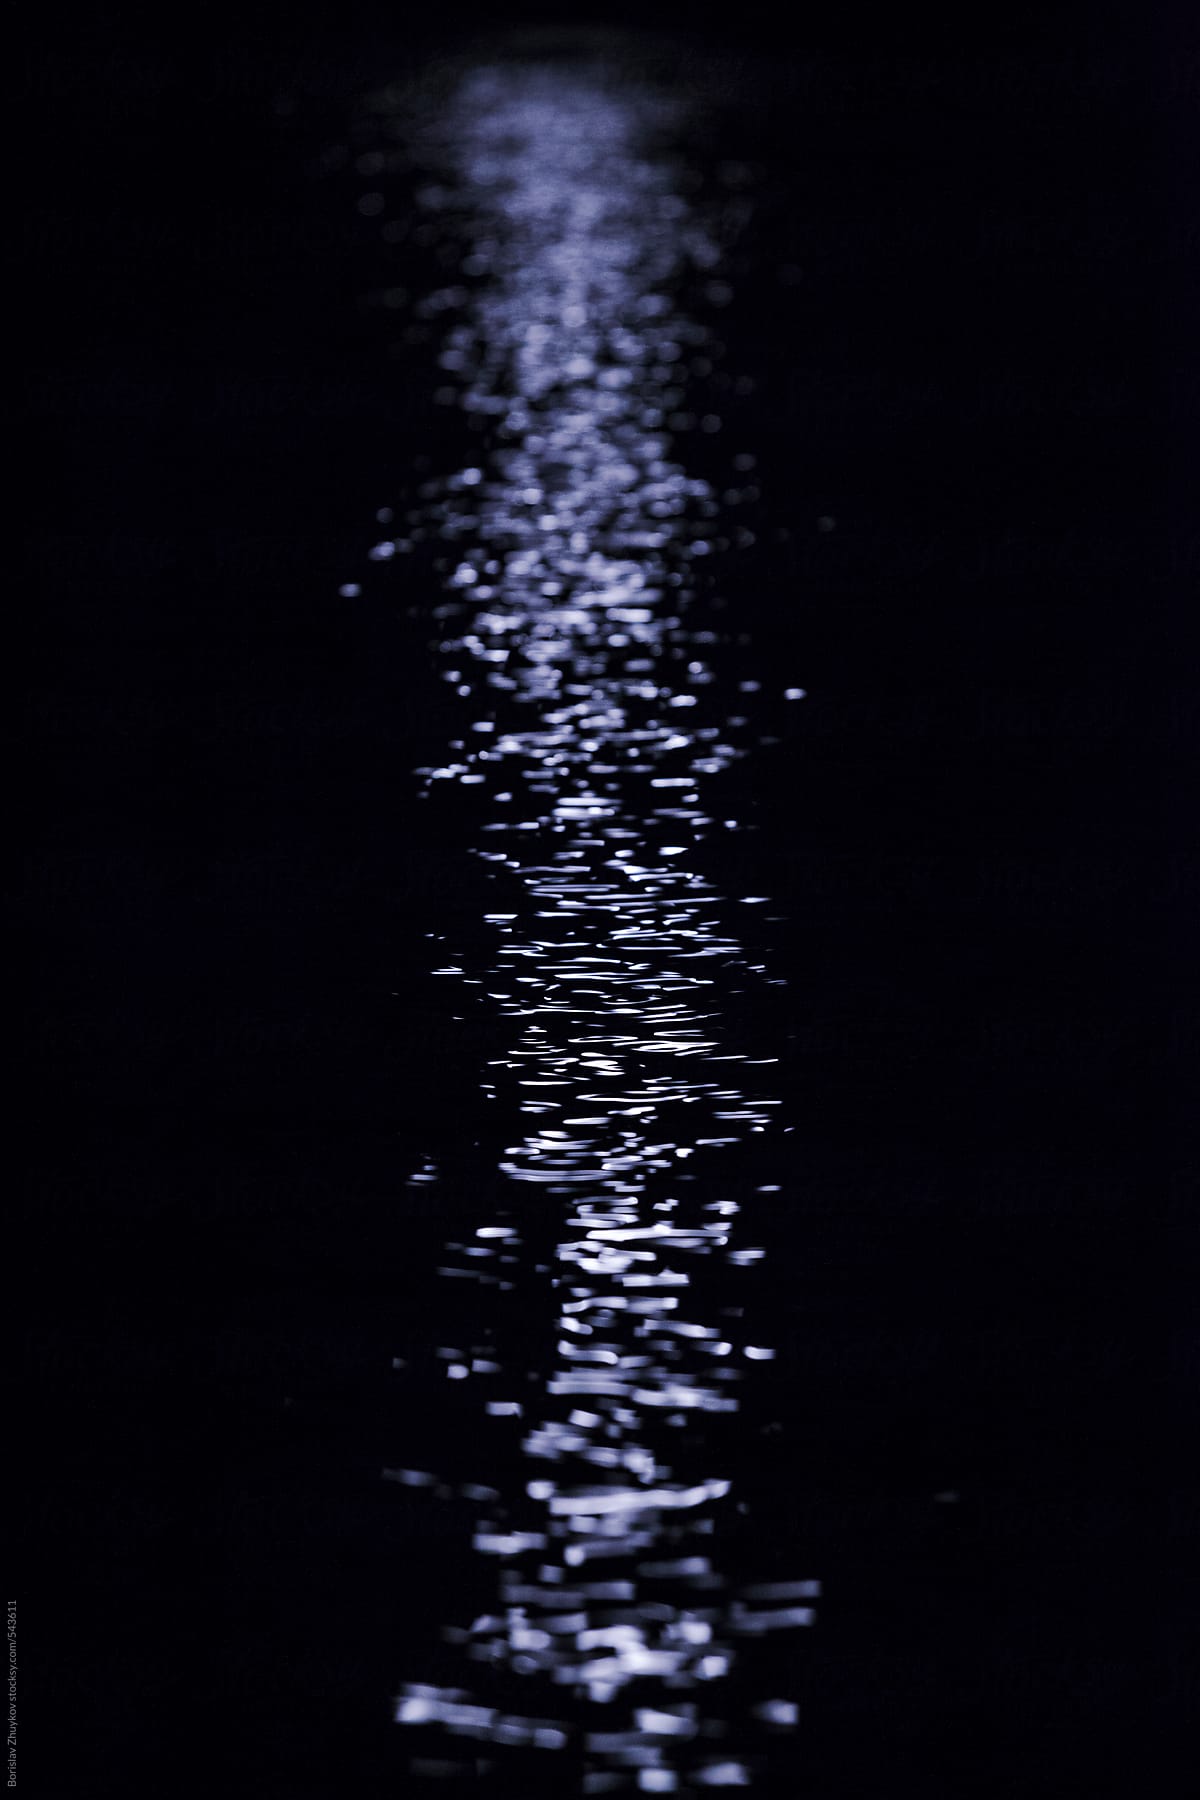 Moon light on the water